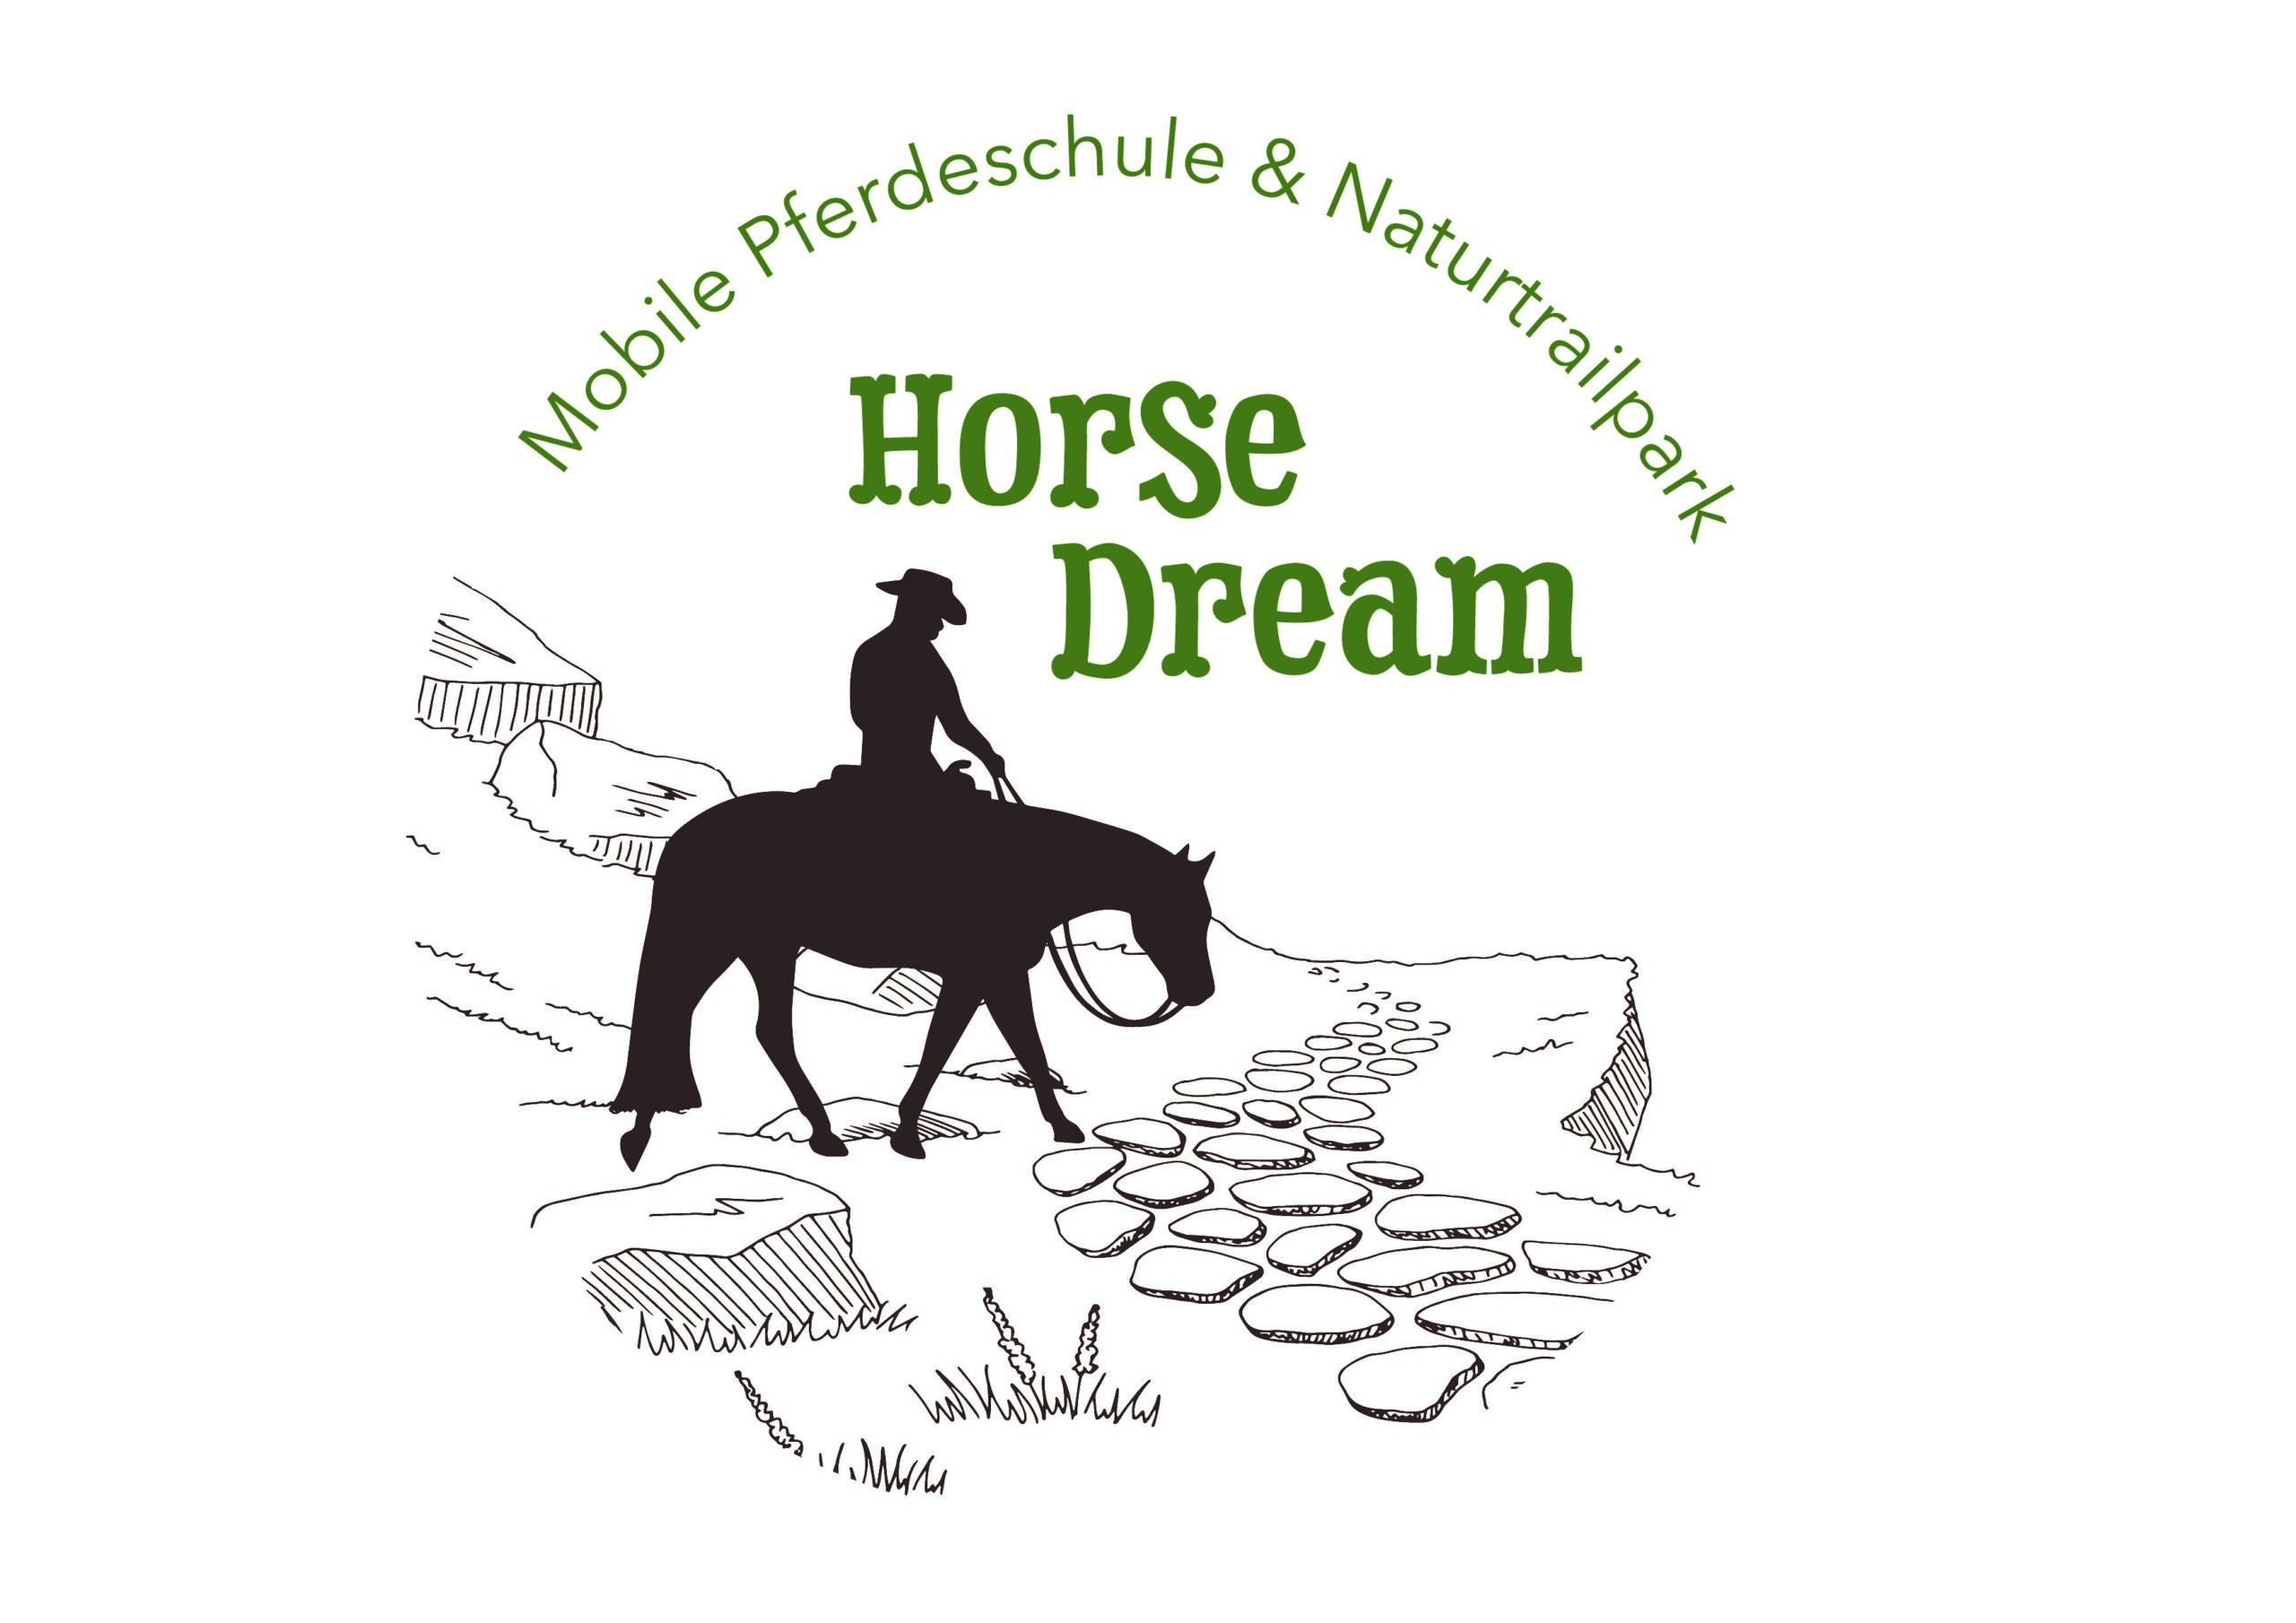 Horse-Dream-Pferdeschule